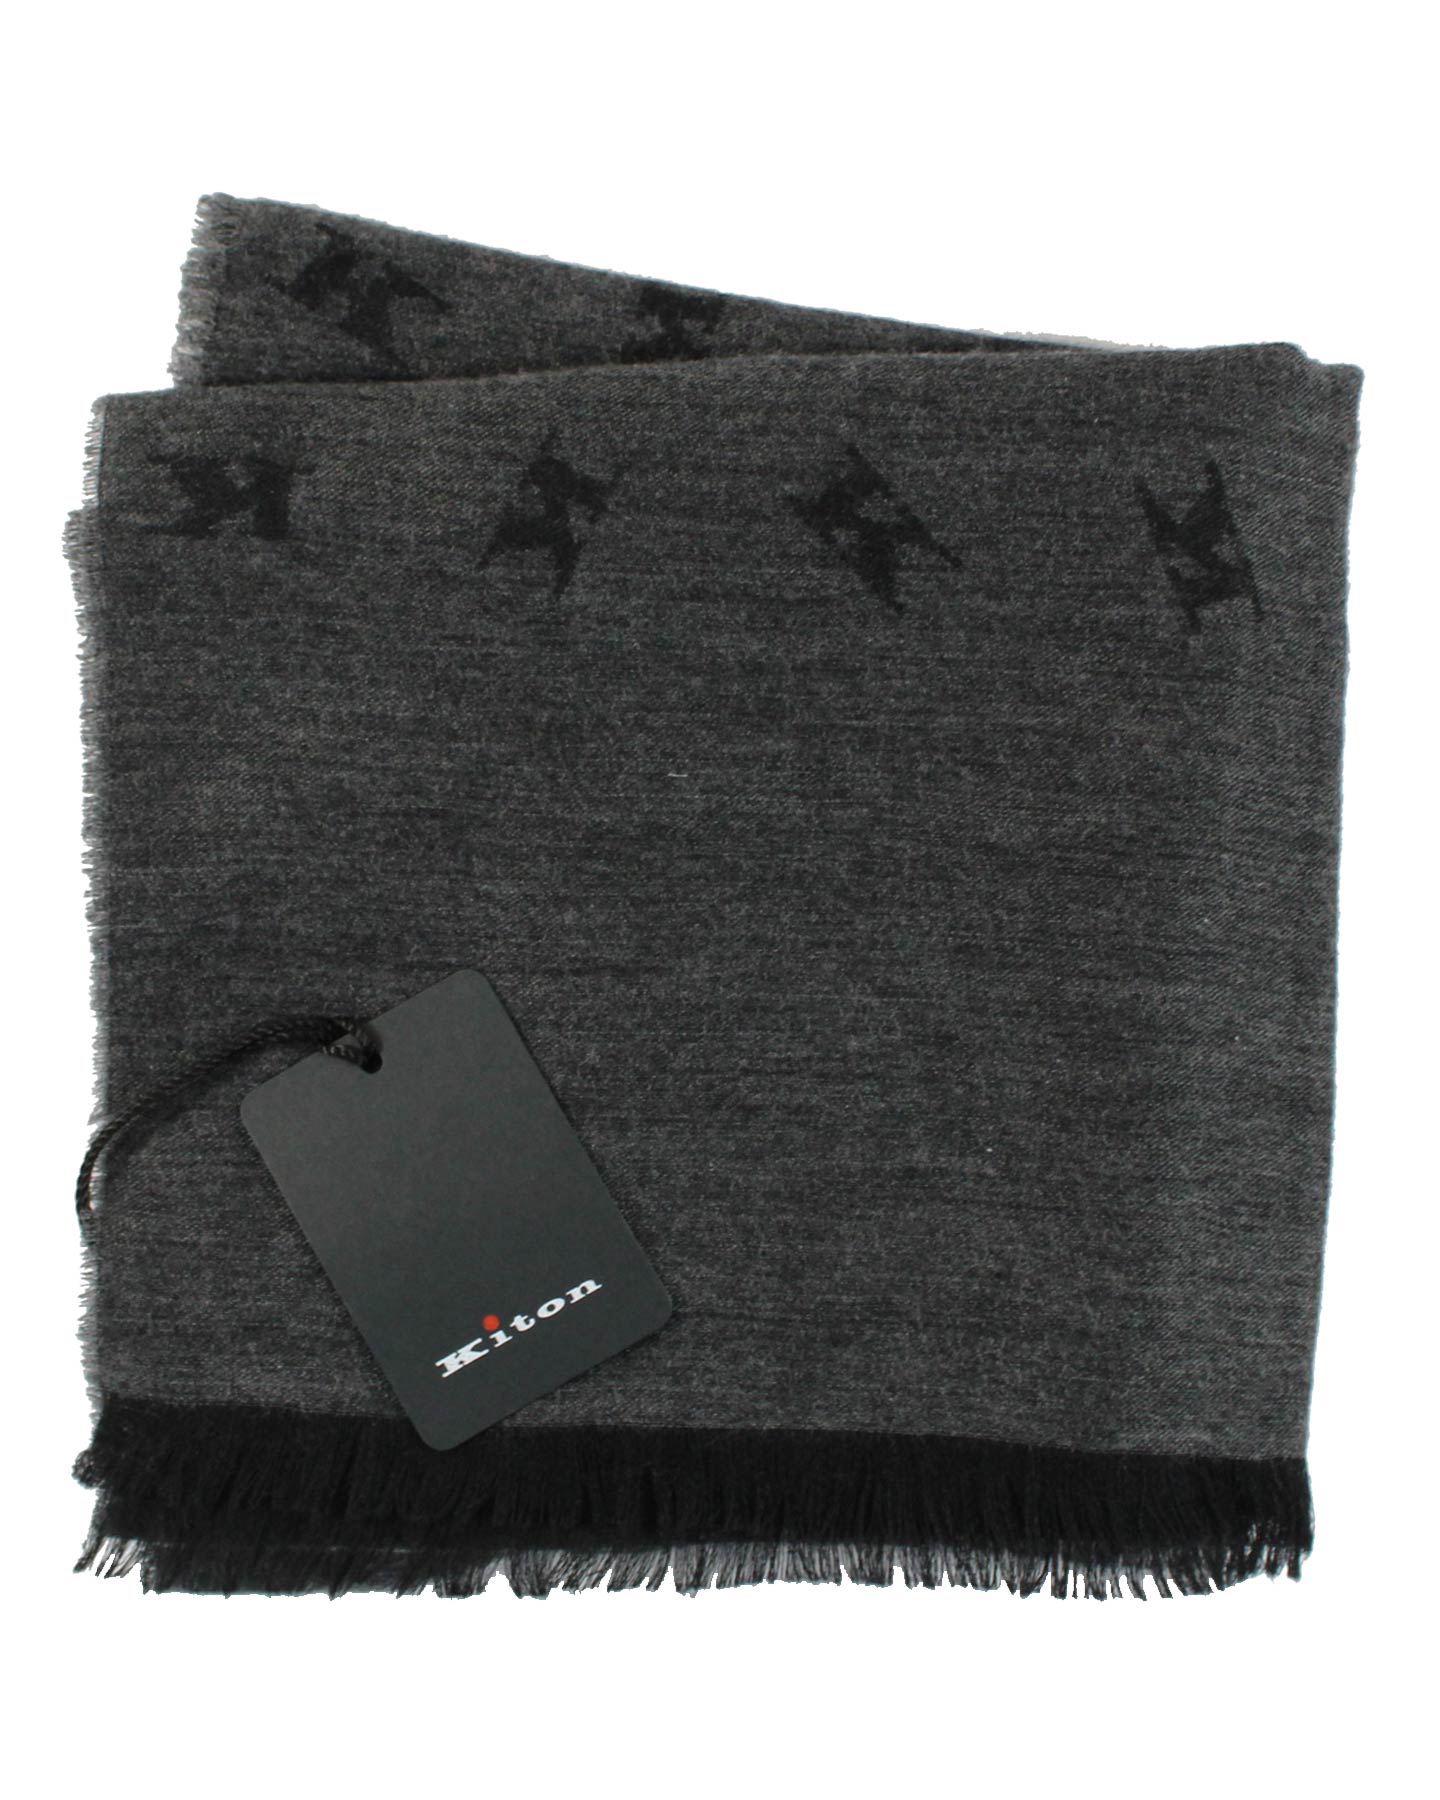 Kiton Scarf Gray Black K Design - Wool Silk Shawl